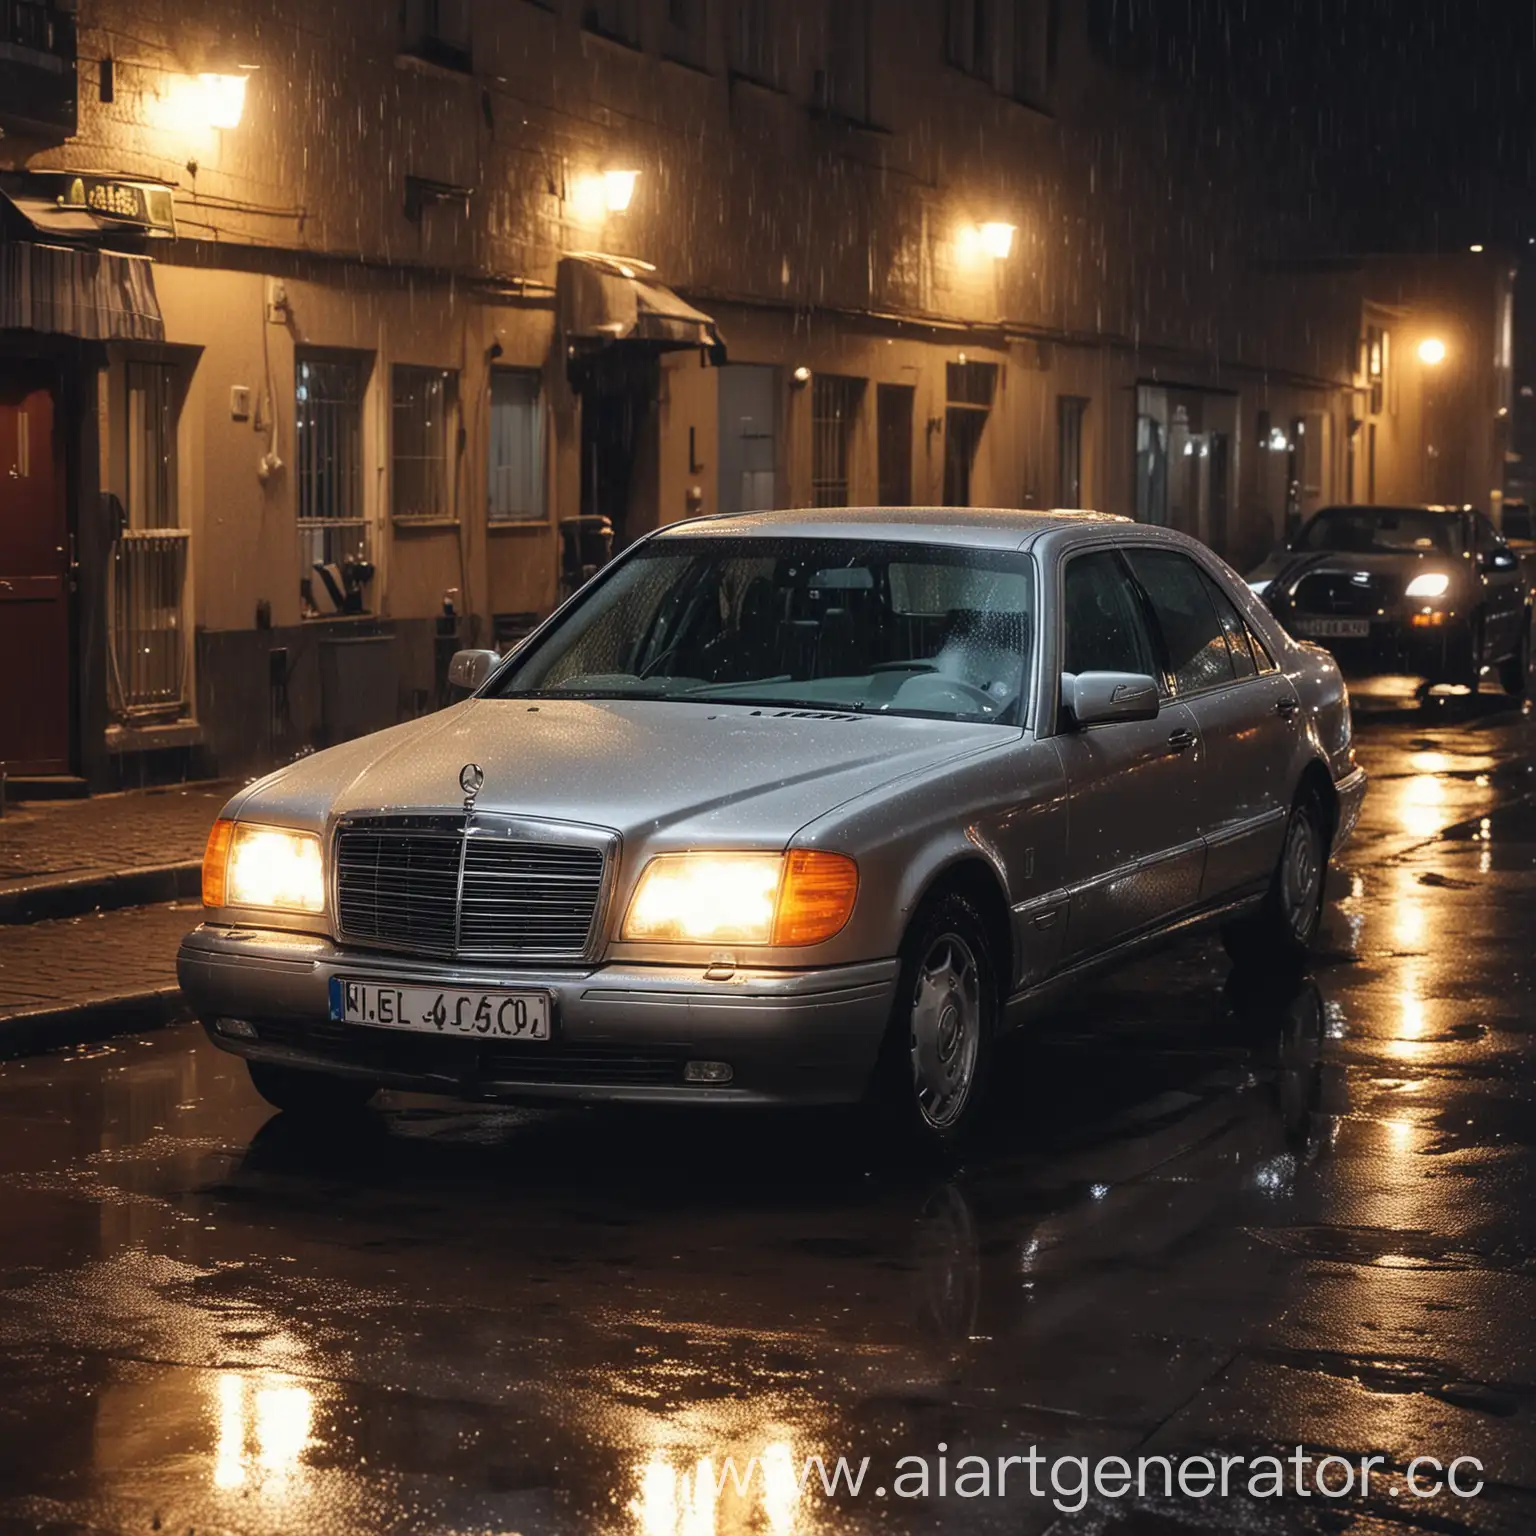 MercedesBenz-W140-S600-Parked-under-Lamp-in-Rainy-Night